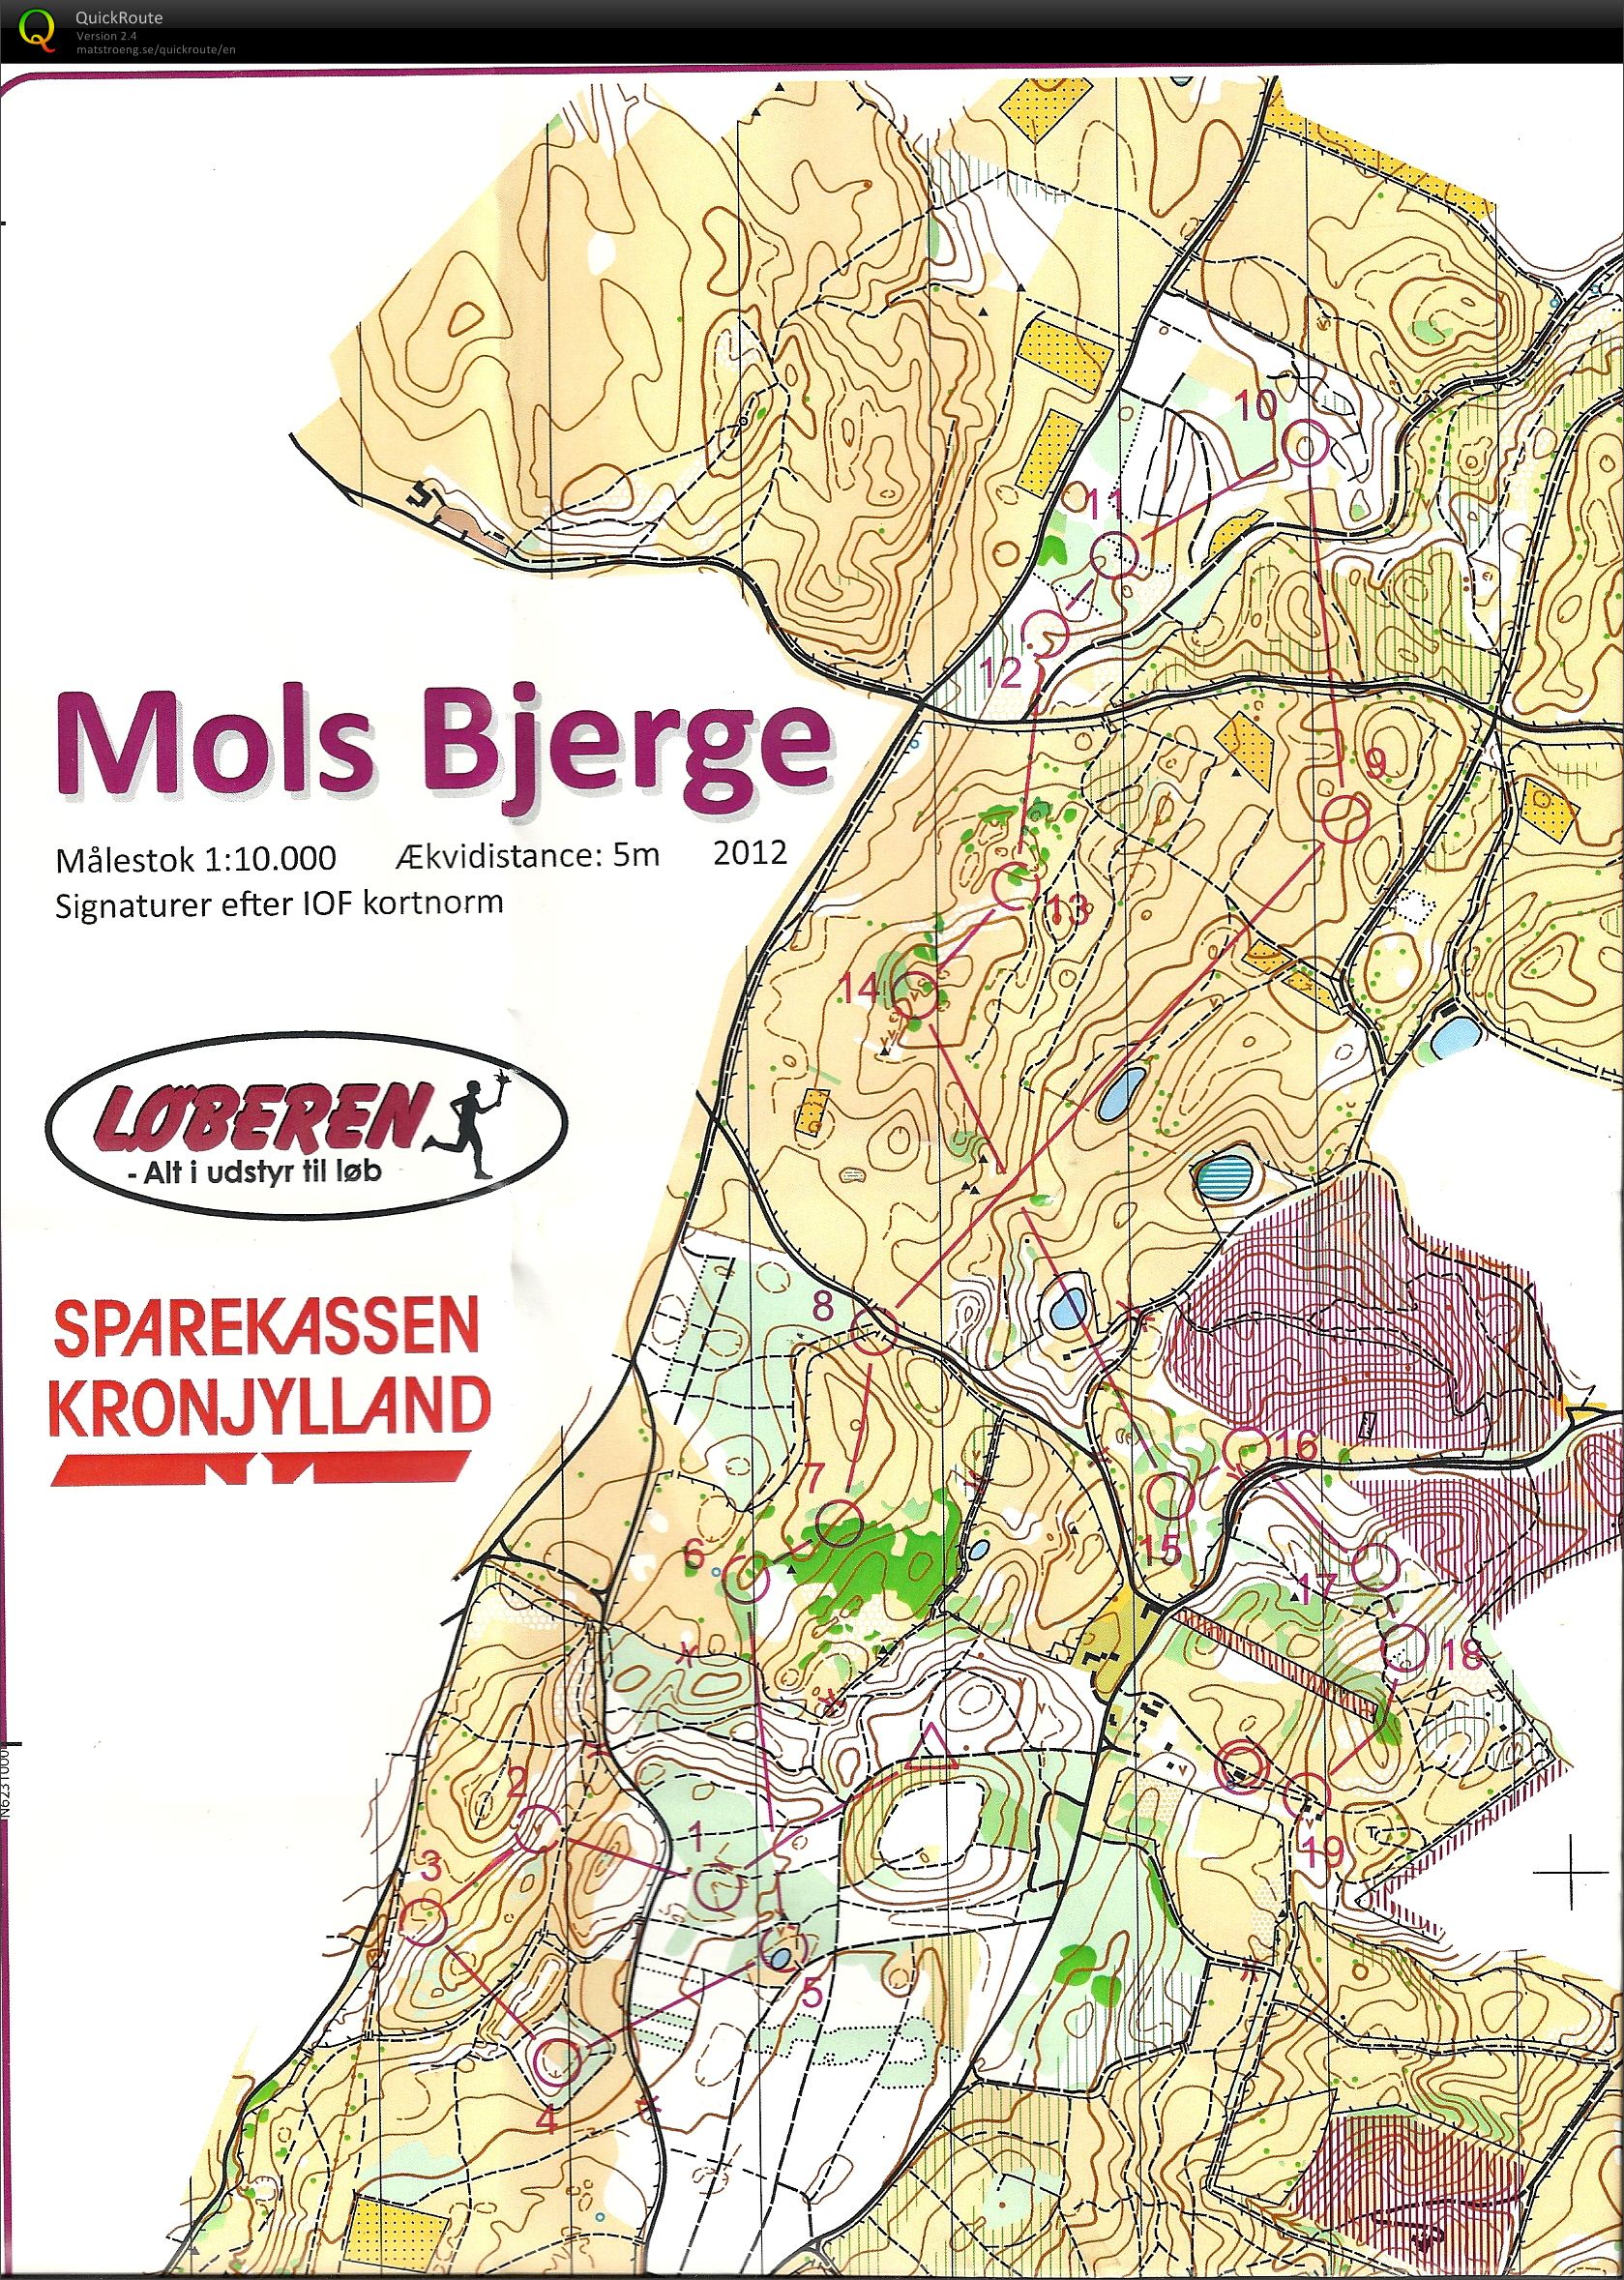 Mols Bjerge, JFM Lang, D45, LeneSN (2012-08-19)